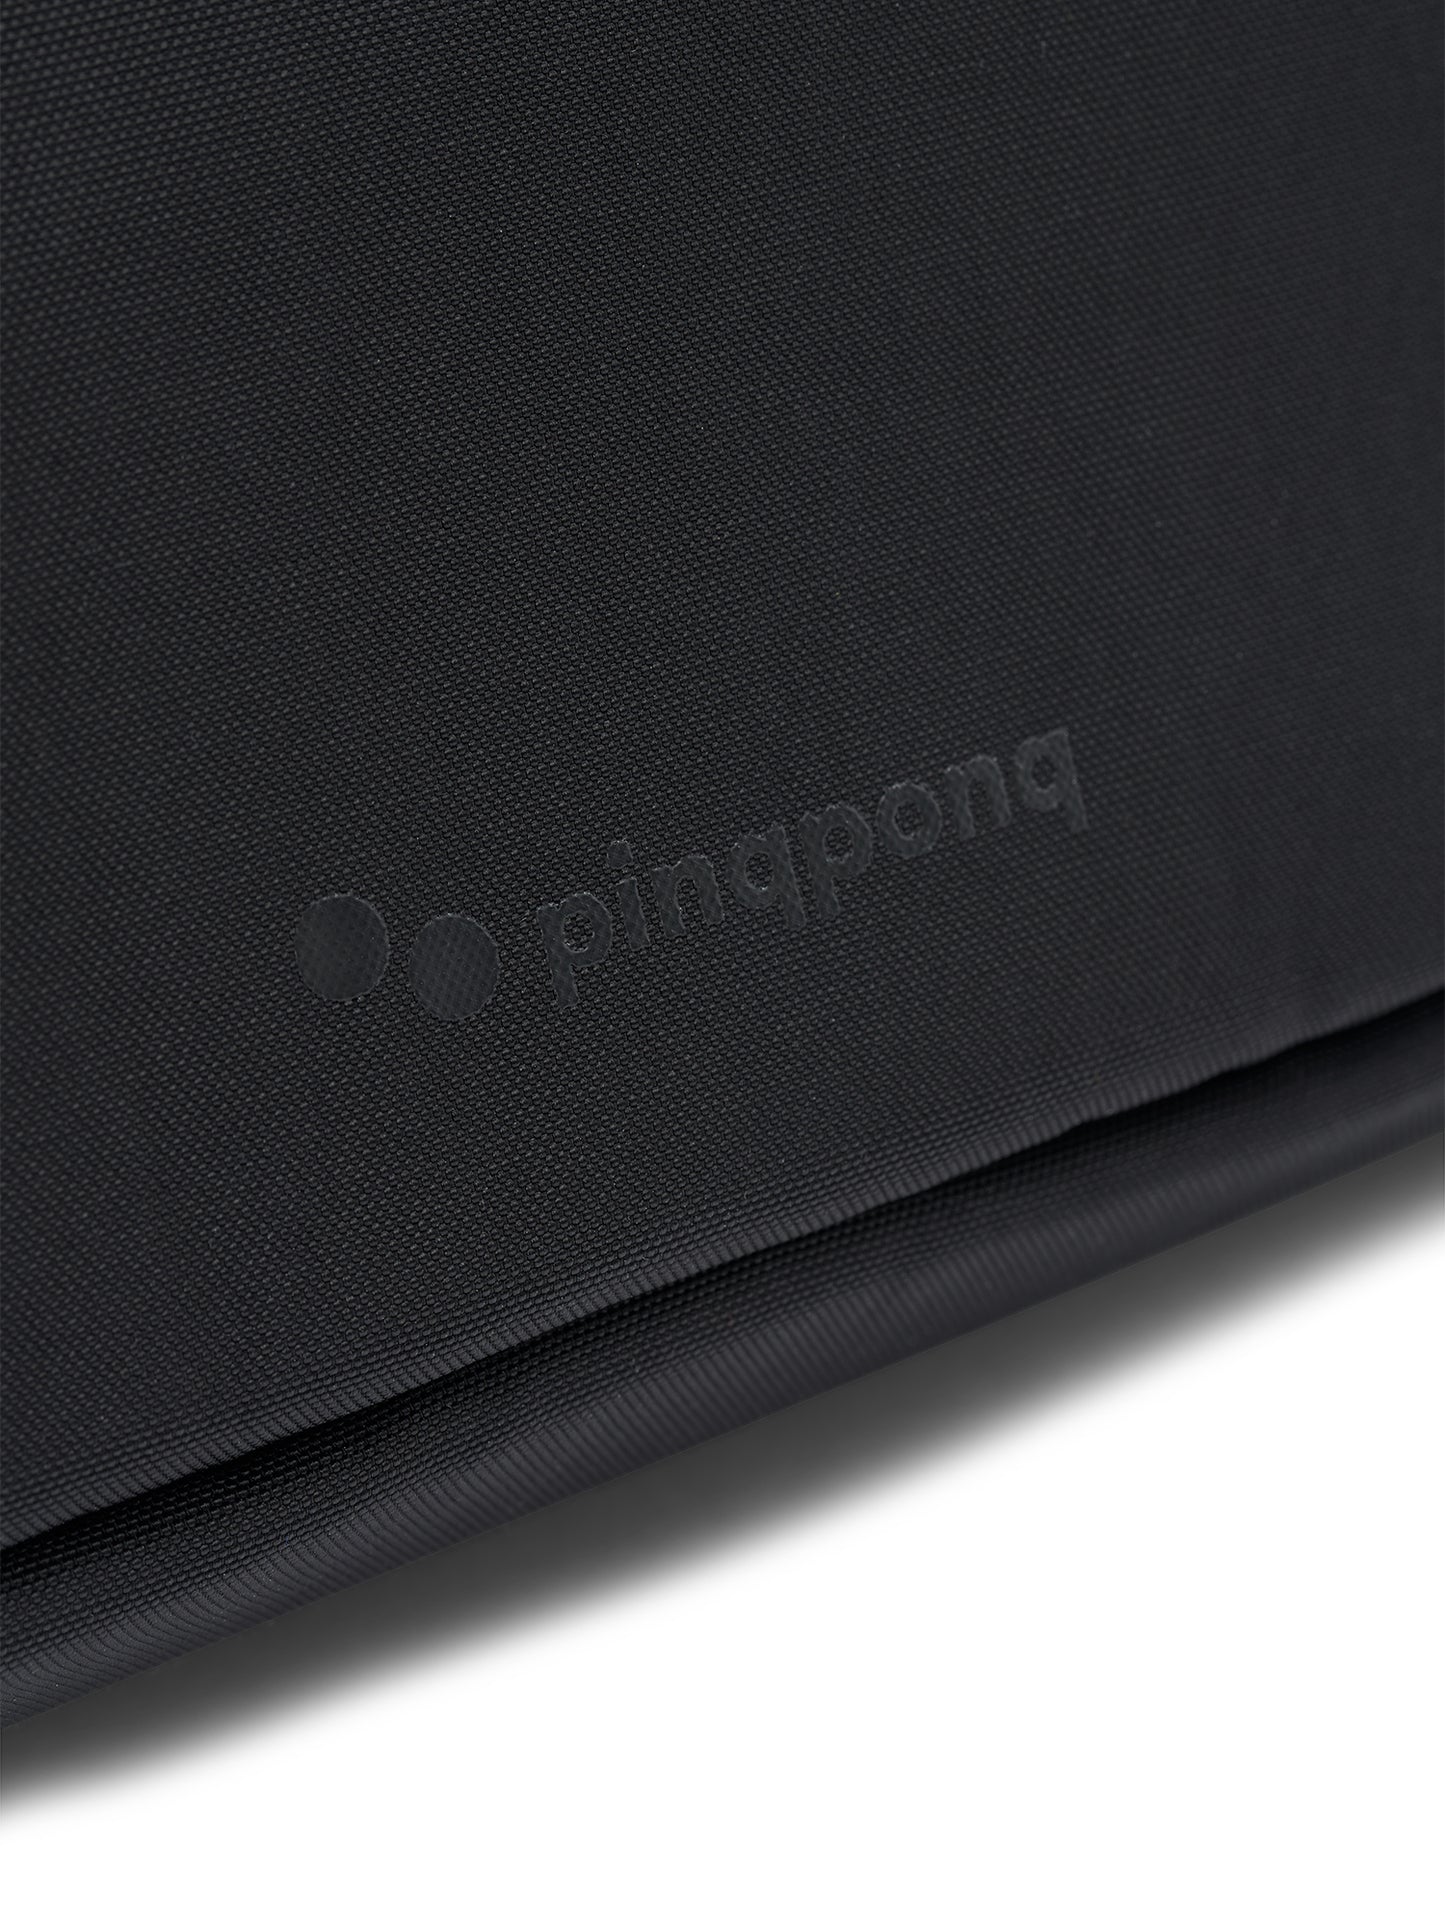 pinqponq - Washbag Crinkle Black